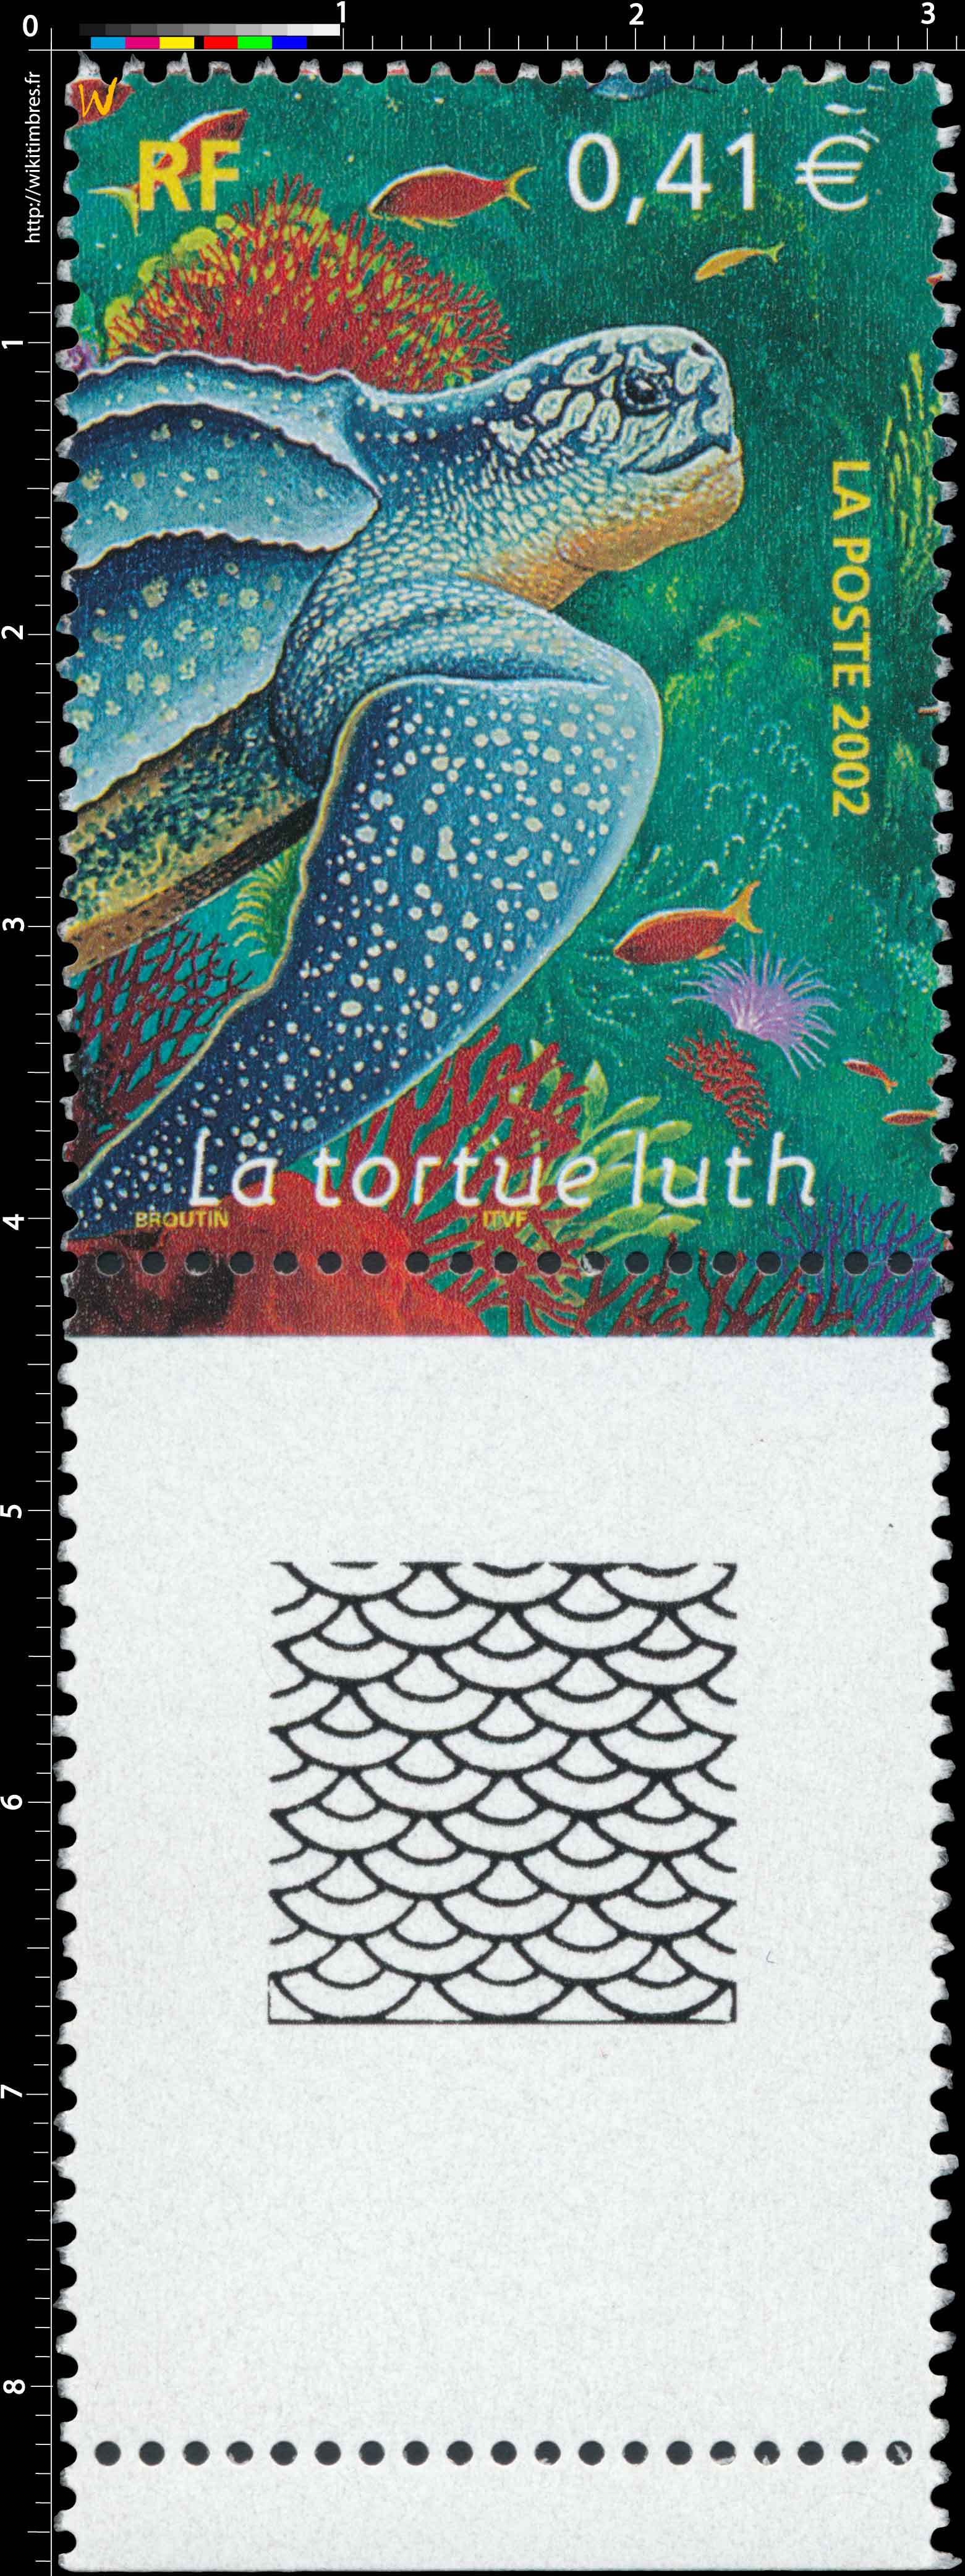 2002 La tortue luth